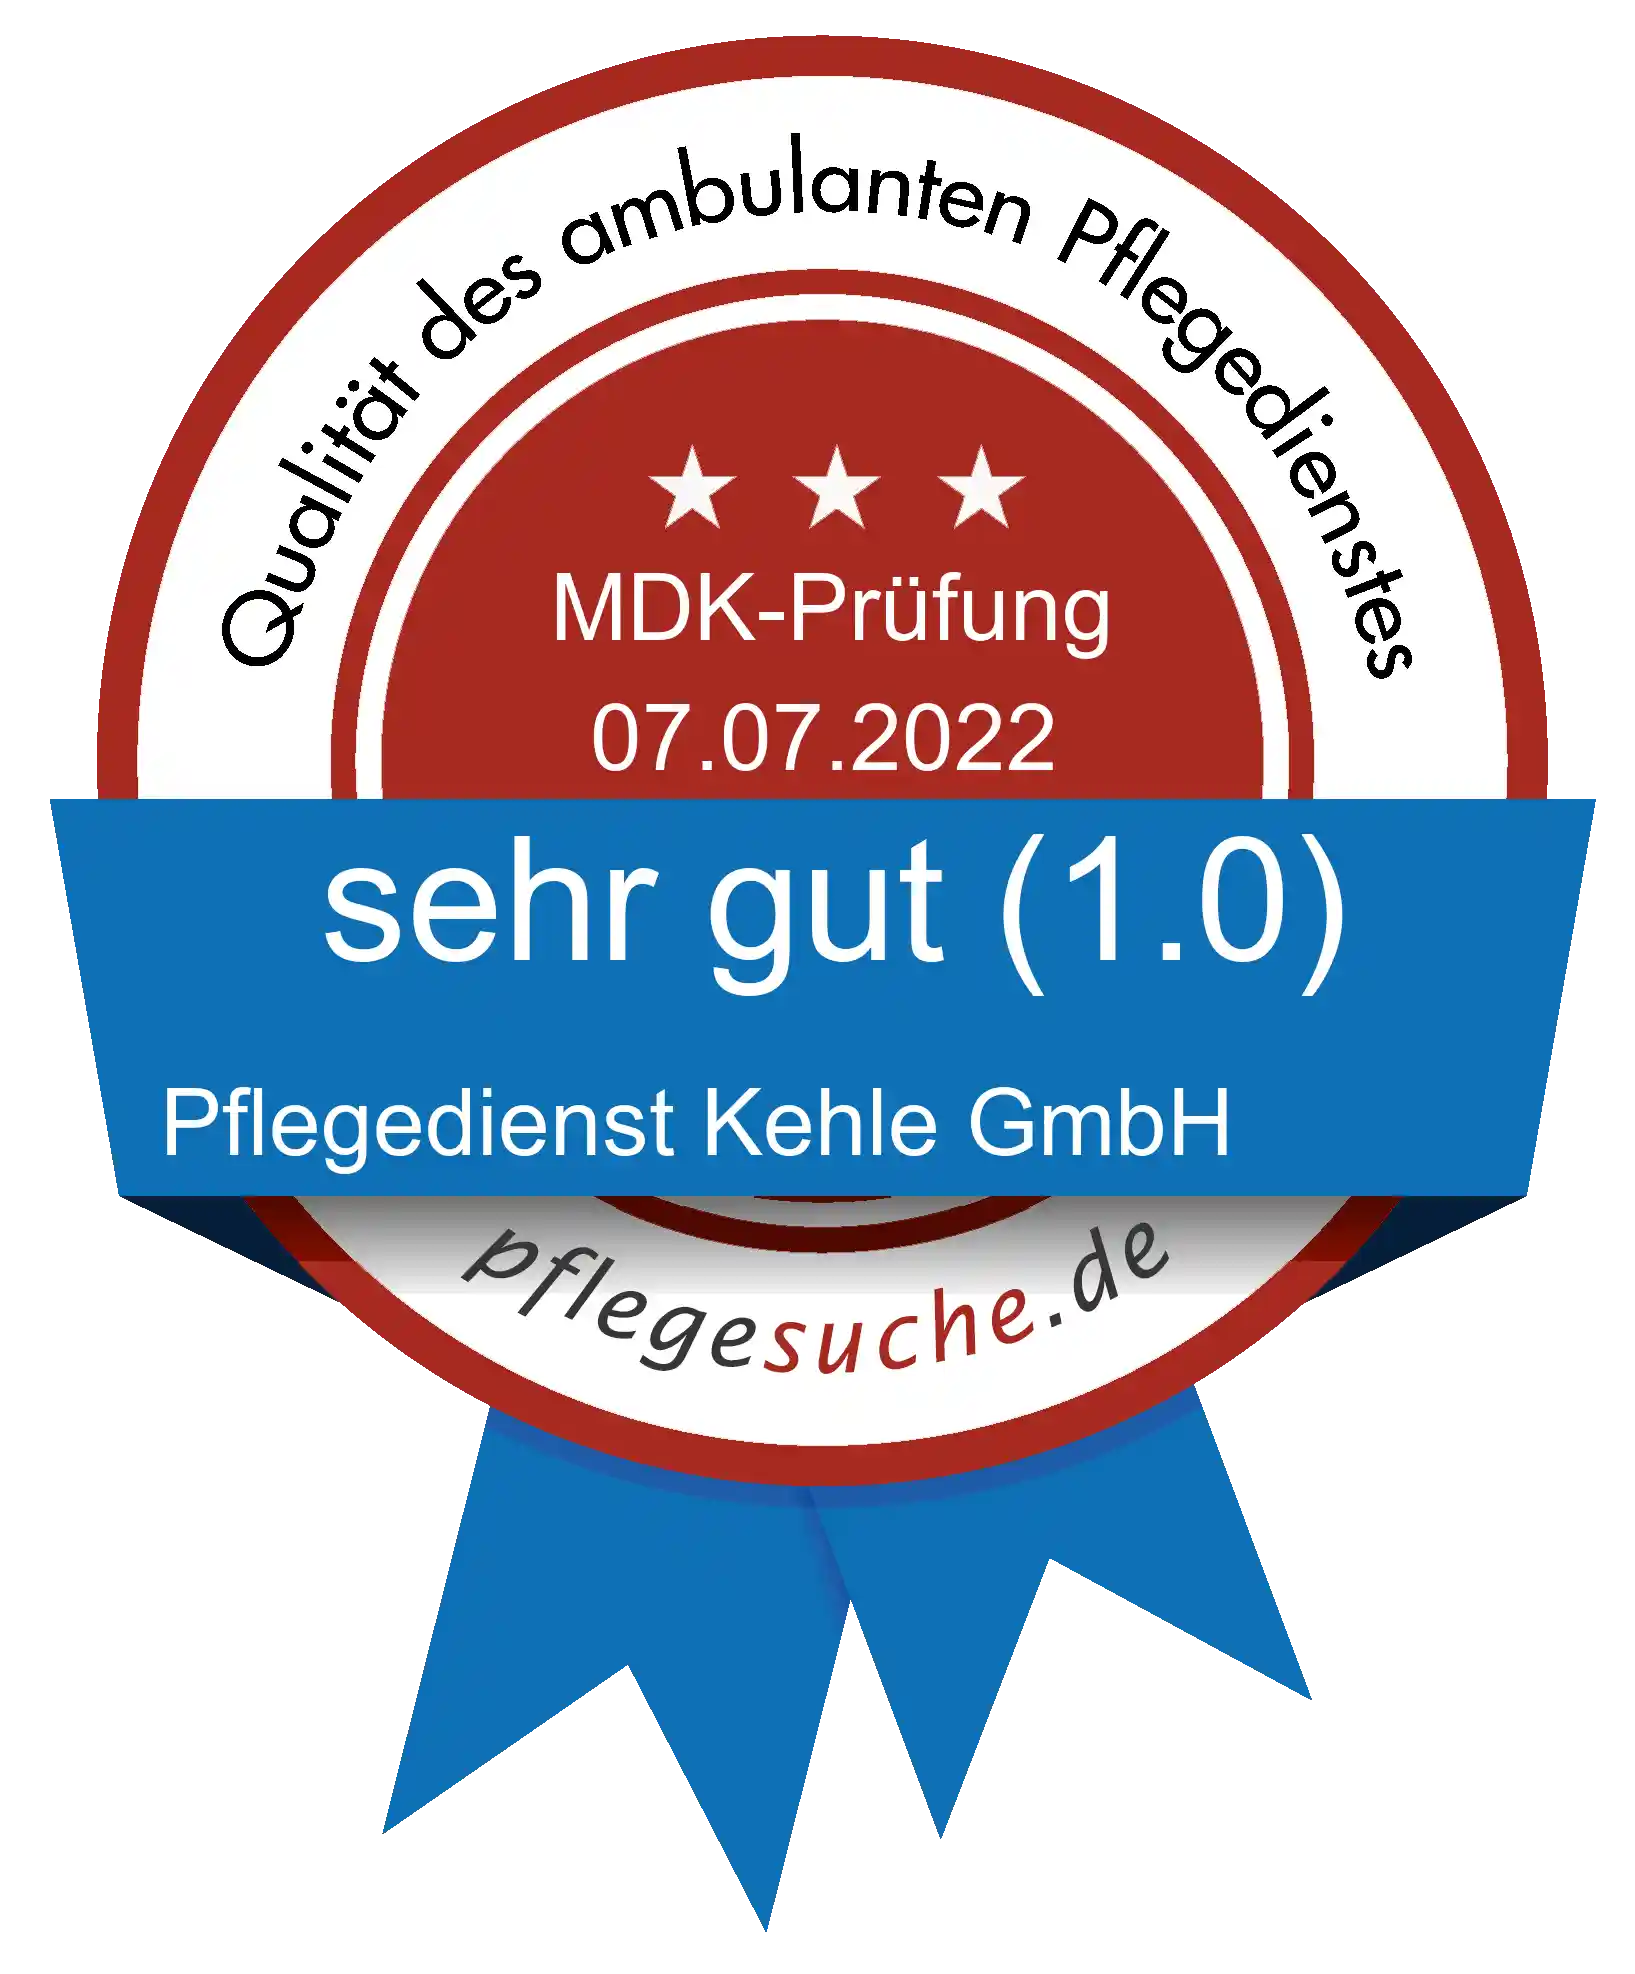 Siegel Benotung: Pflegedienst Kehle GmbH